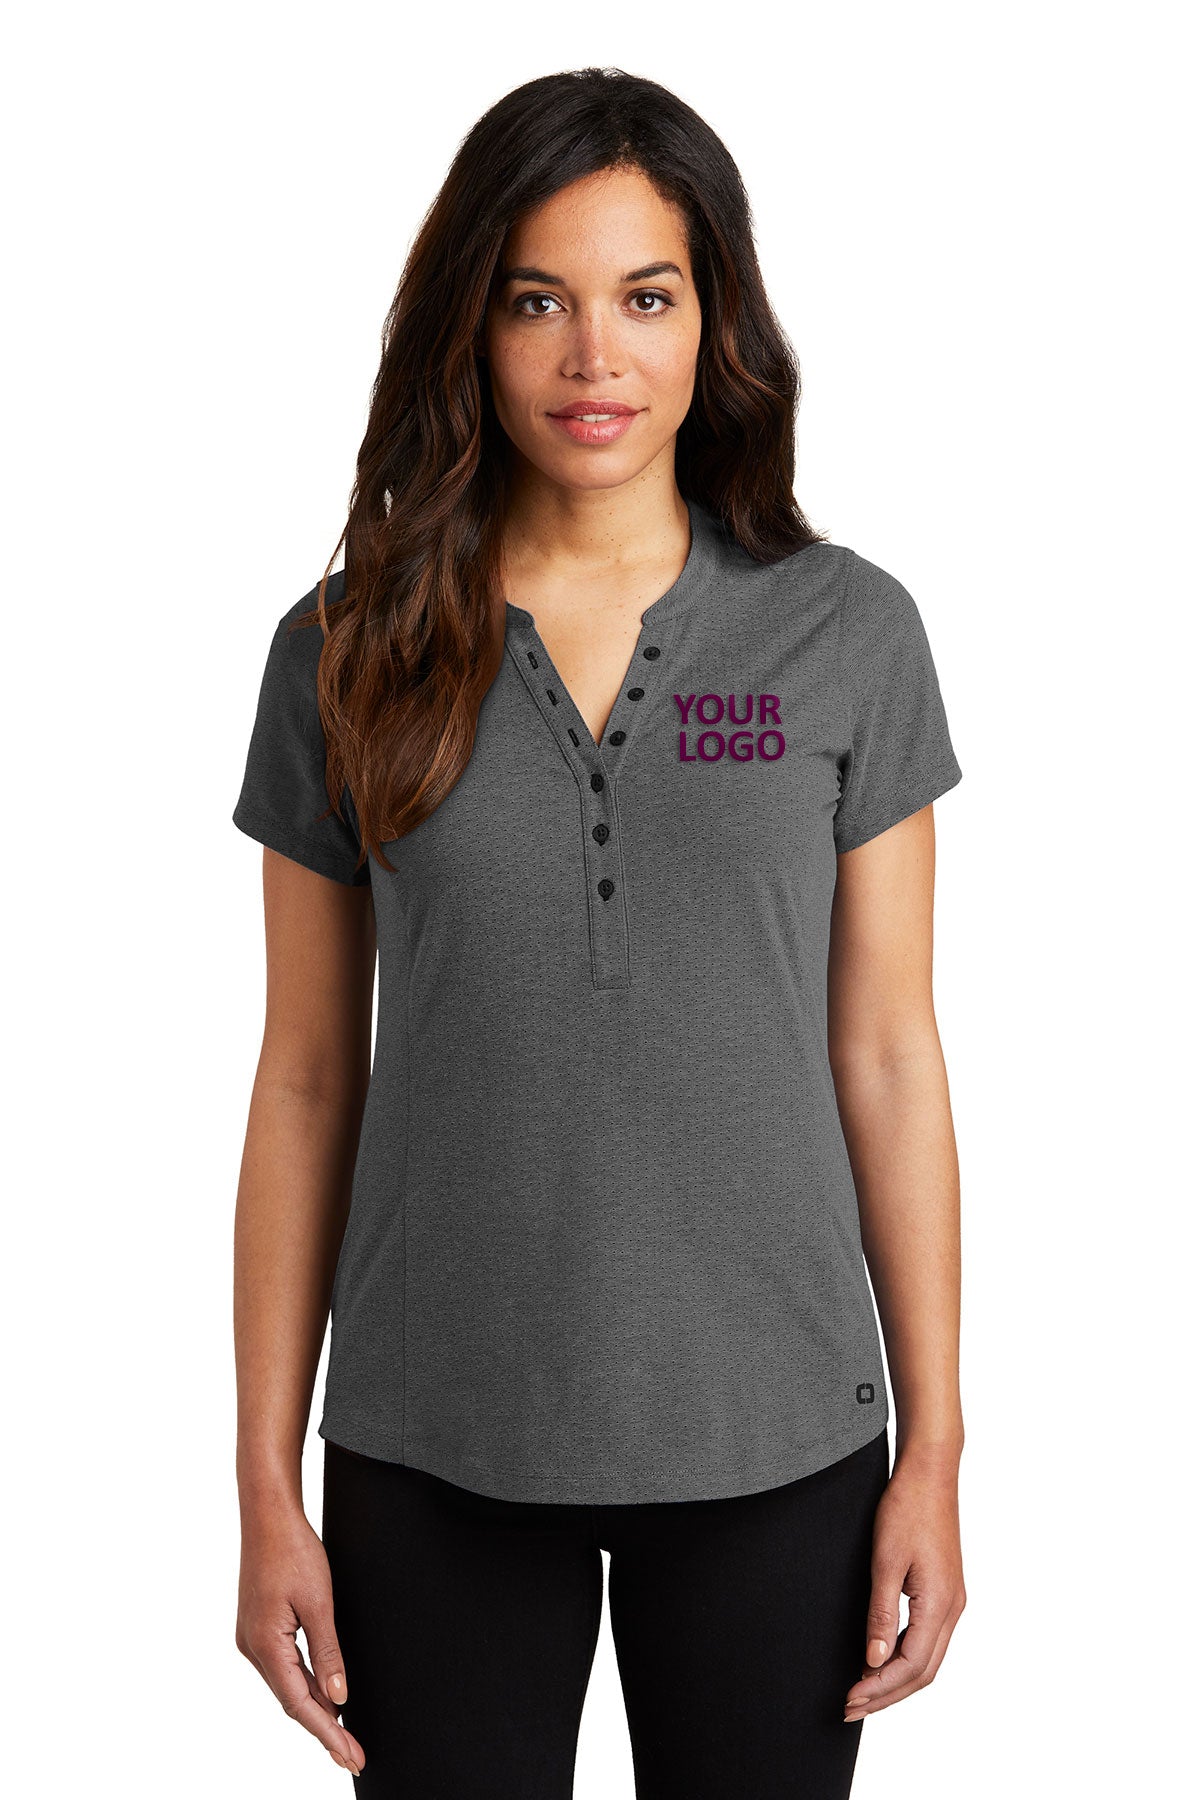 OGIO Blacktop Heather LOG136 polo shirts with custom logo